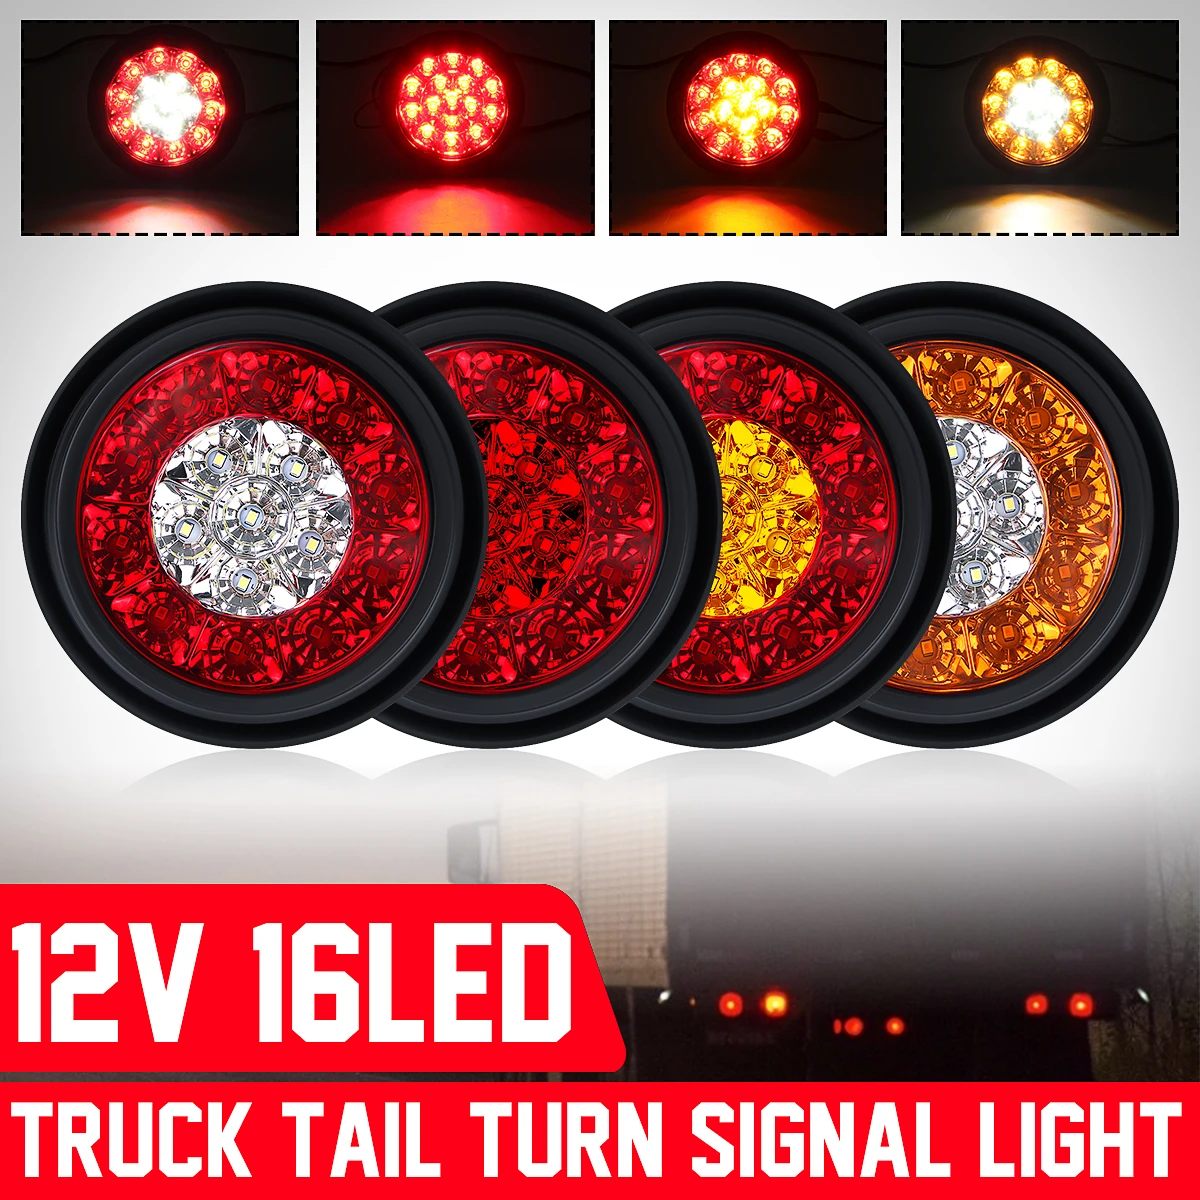 

2Pcs 12V 16 LED Car Round Amber Red Taillights Rear fog Light Stop Brake Running Reverse Lamp For Truck Trailer Lorry